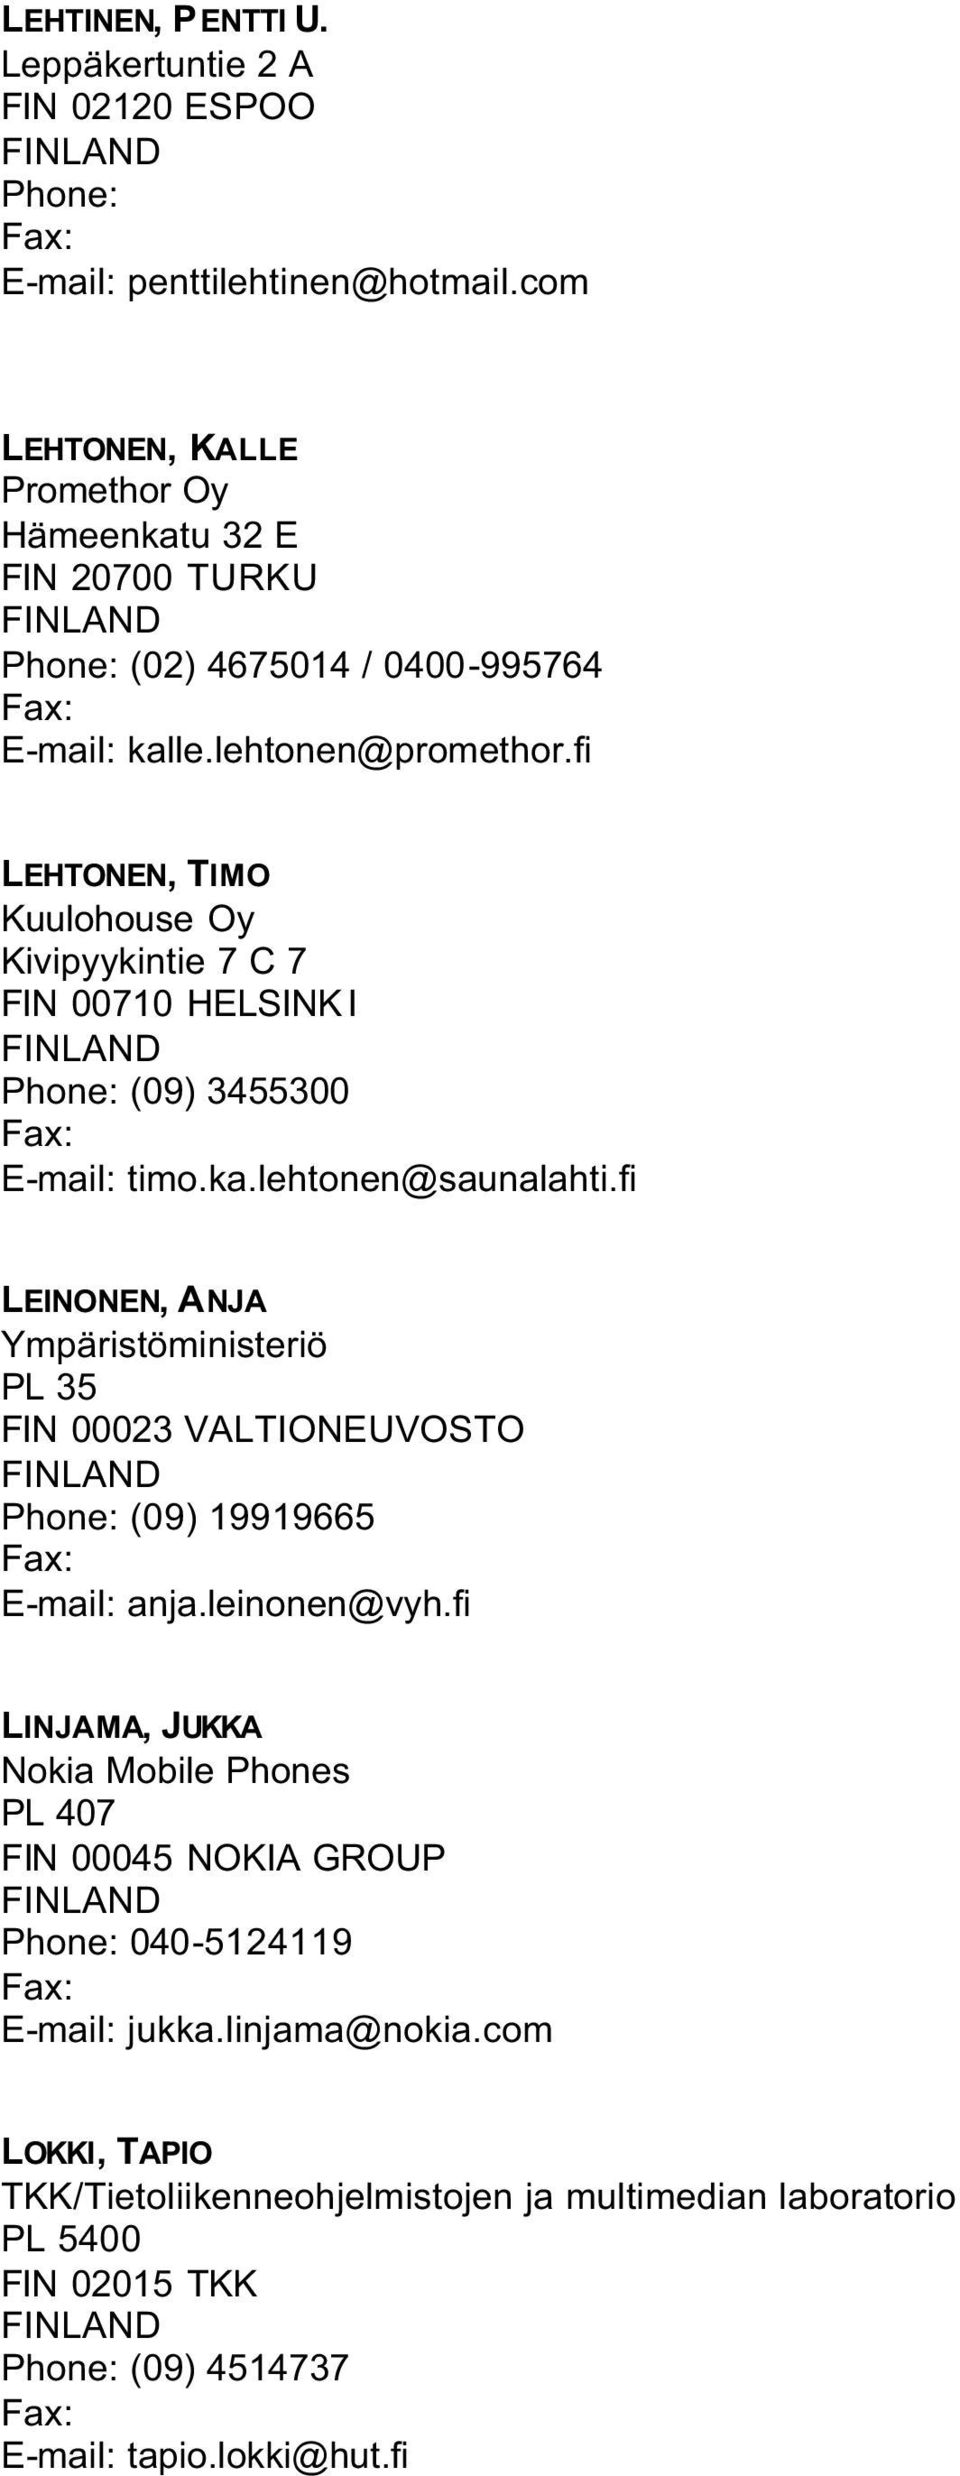 fi LEHTONEN, TIMO Kuulohouse Oy Kivipyykintie 7 C 7 FIN 00710 HELSINK I Phone: (09) 3455300 E-mail: timo.ka.lehtonen@saunalahti.